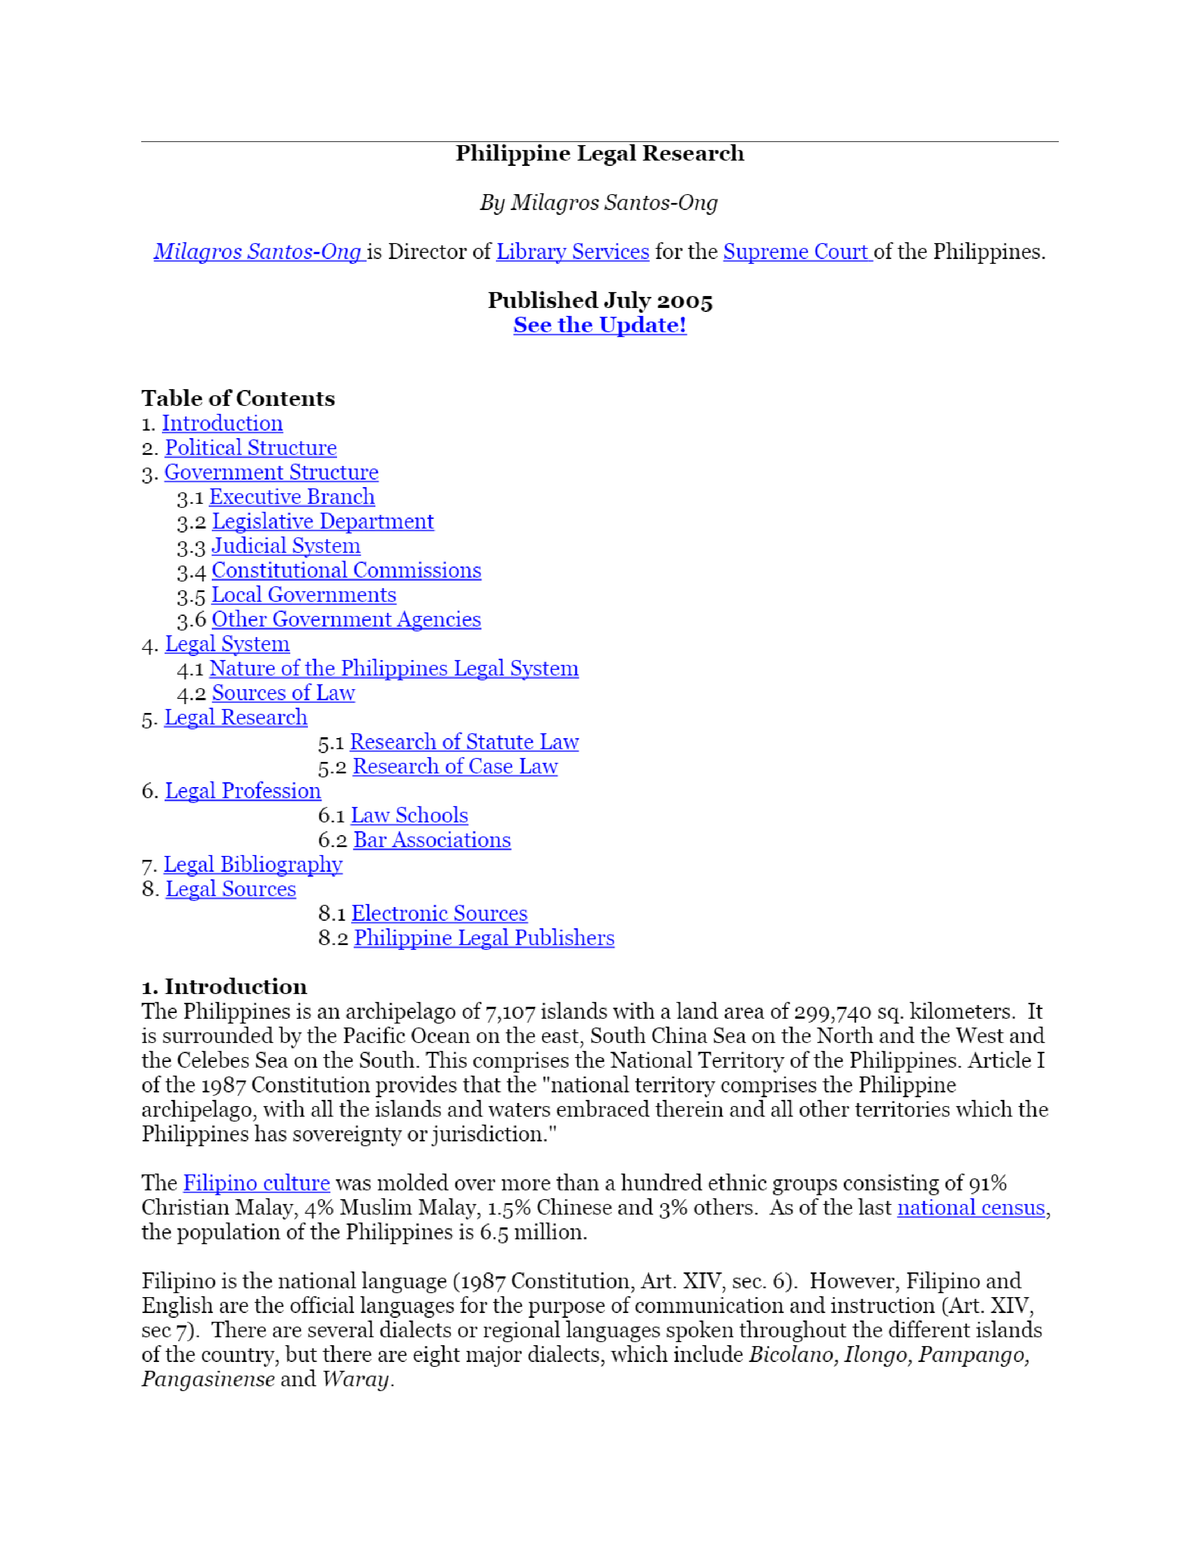 legal thesis topics philippines